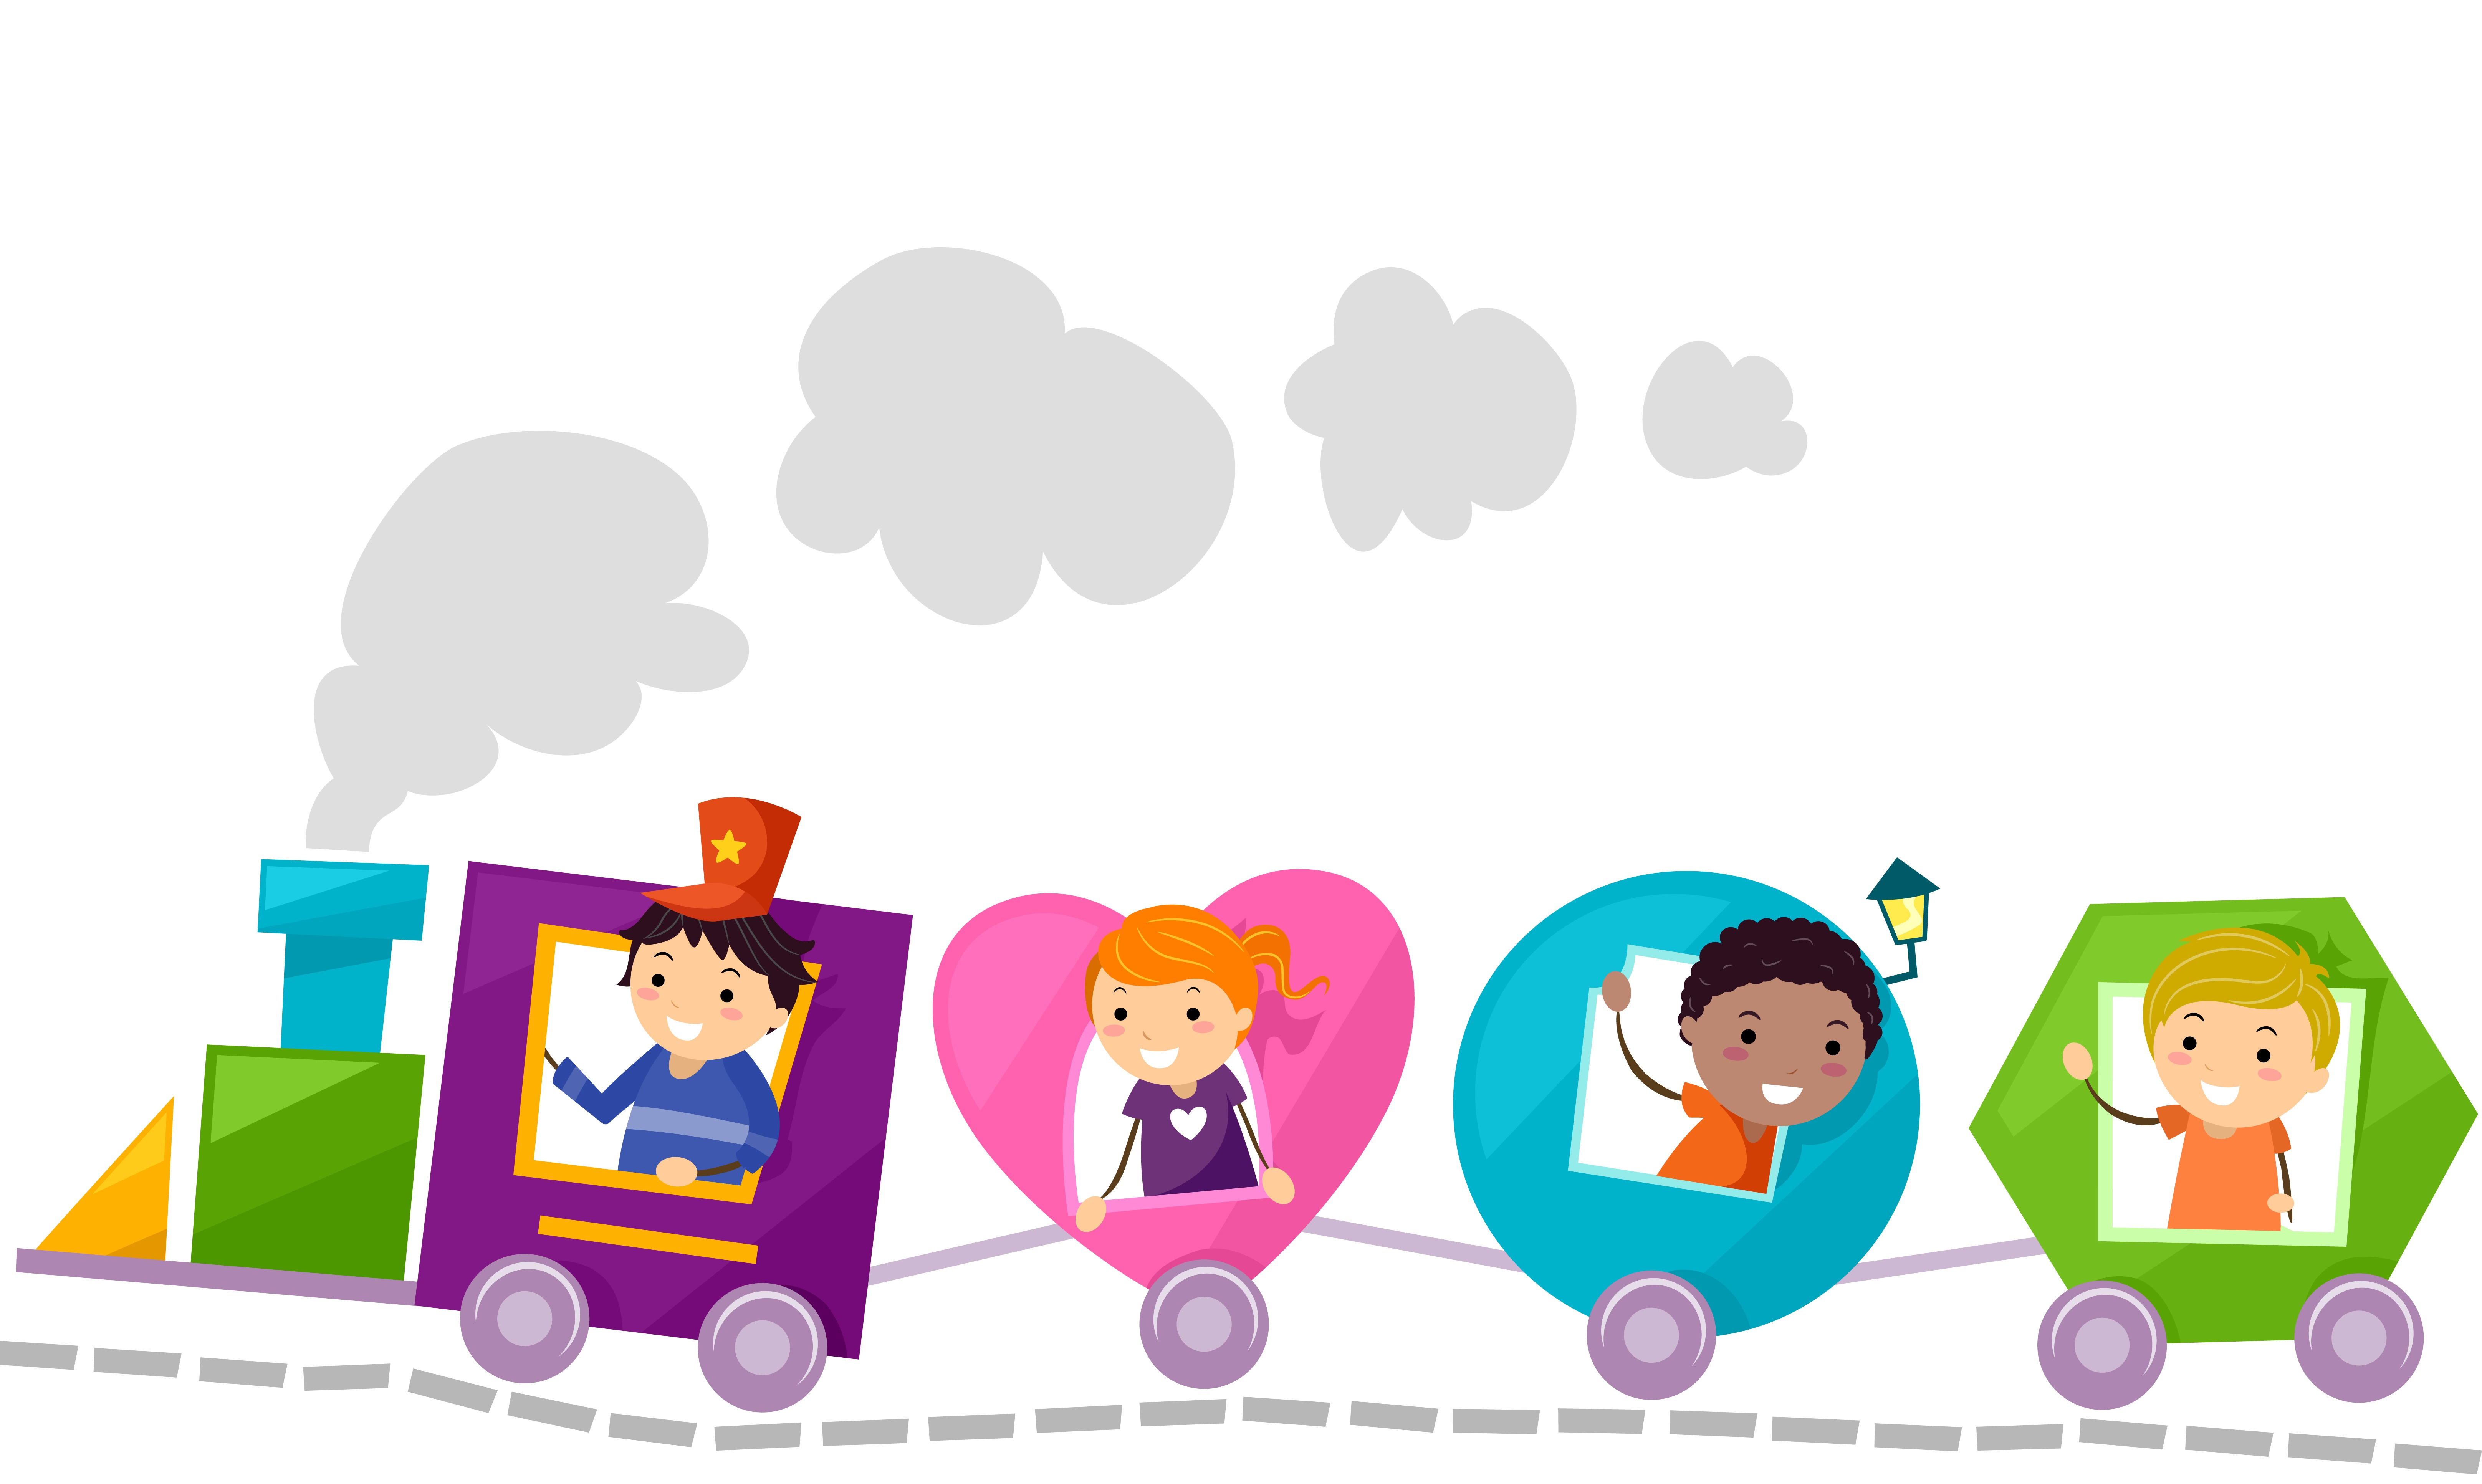 Children's train illustration